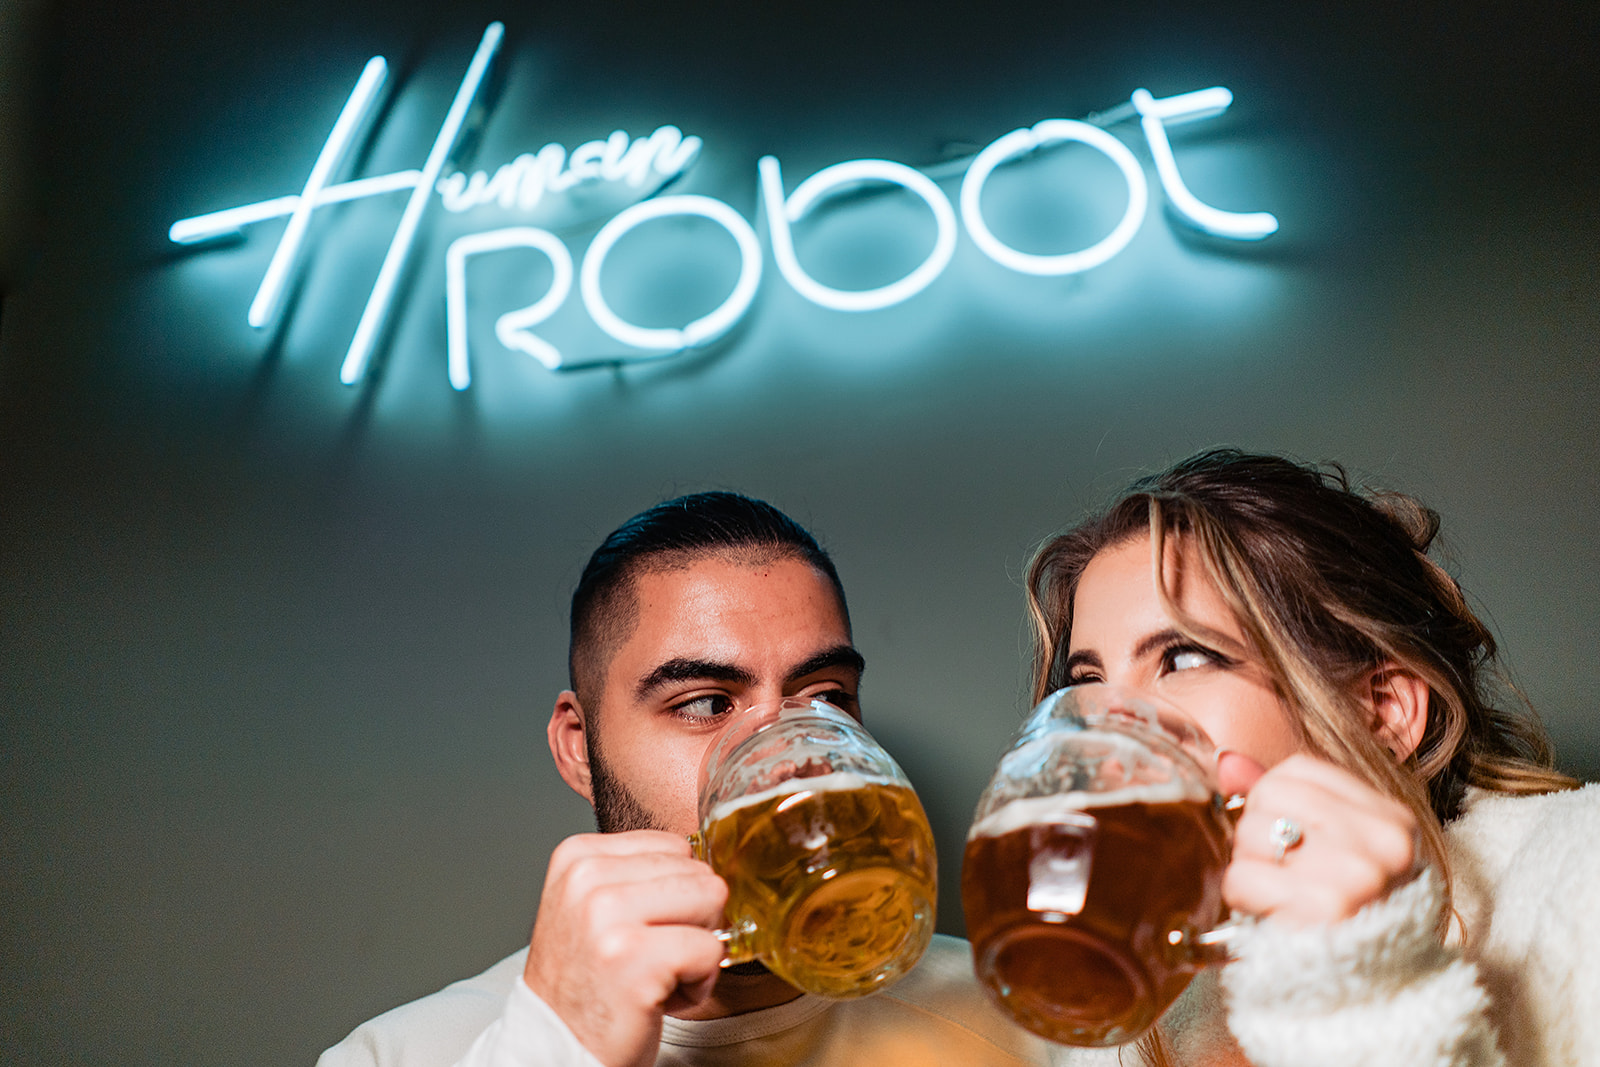 engagement photos at human robot brewery